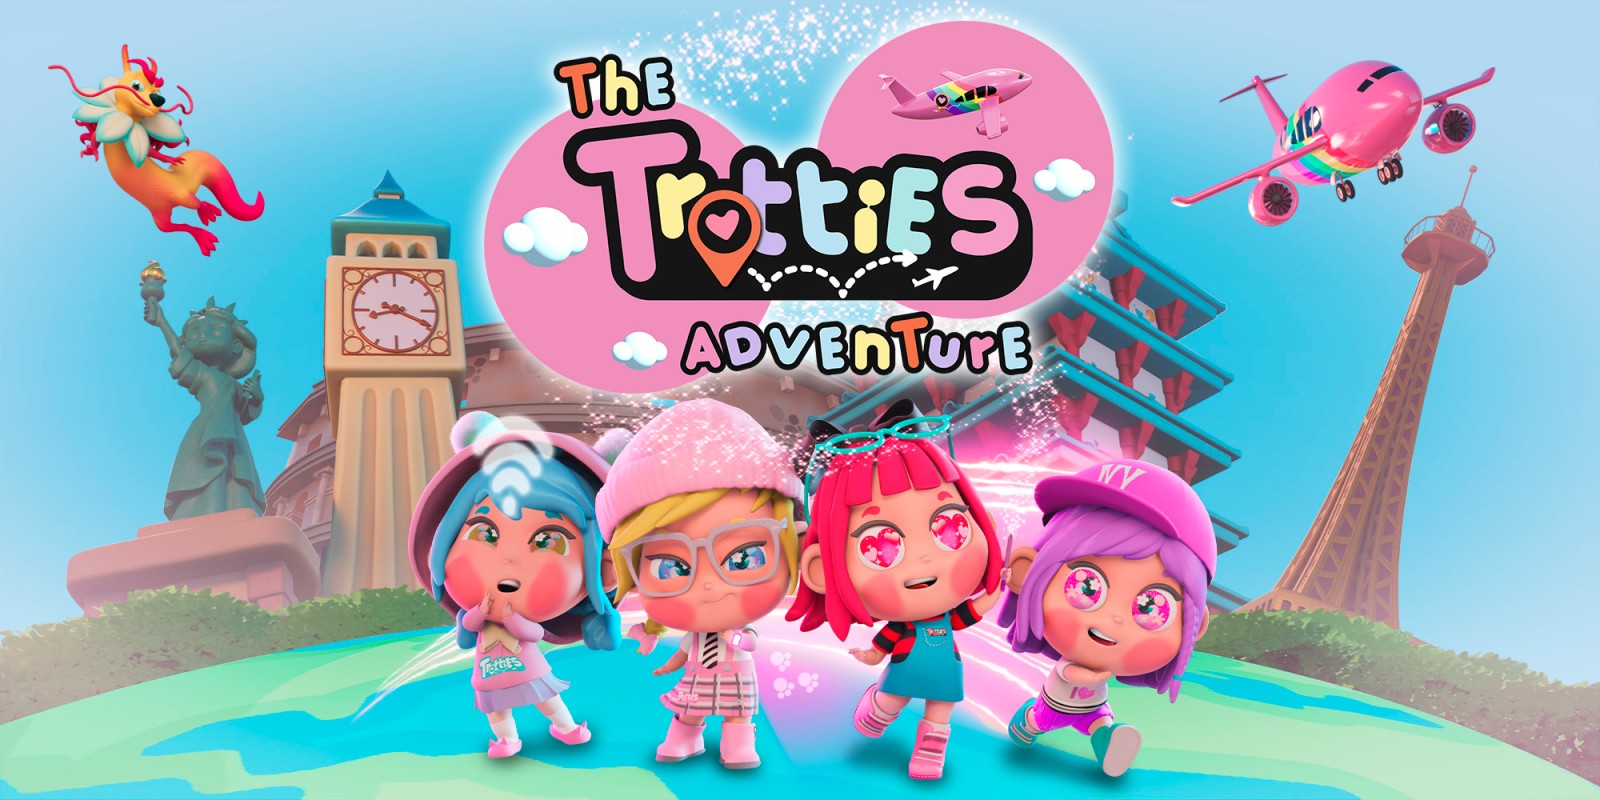 The Trotties Adventure